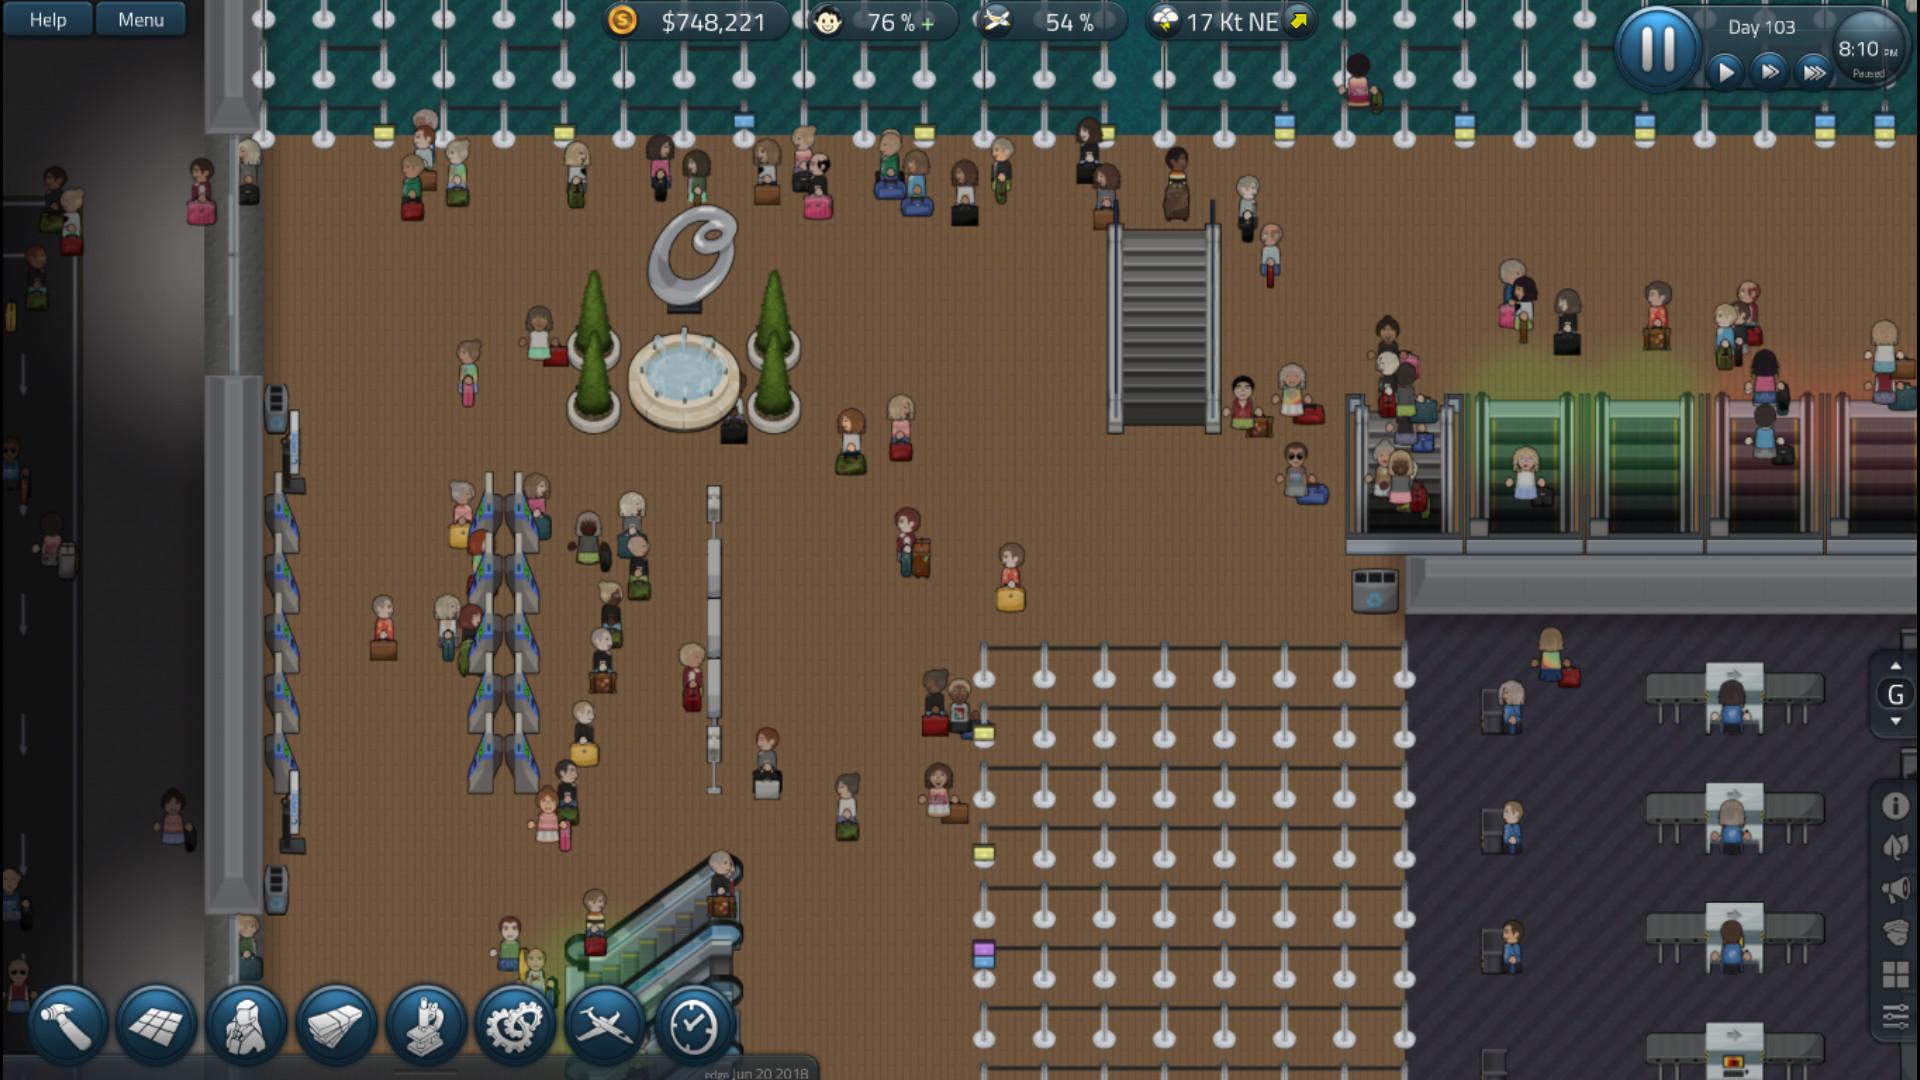 Screenshot №30 from game SimAirport